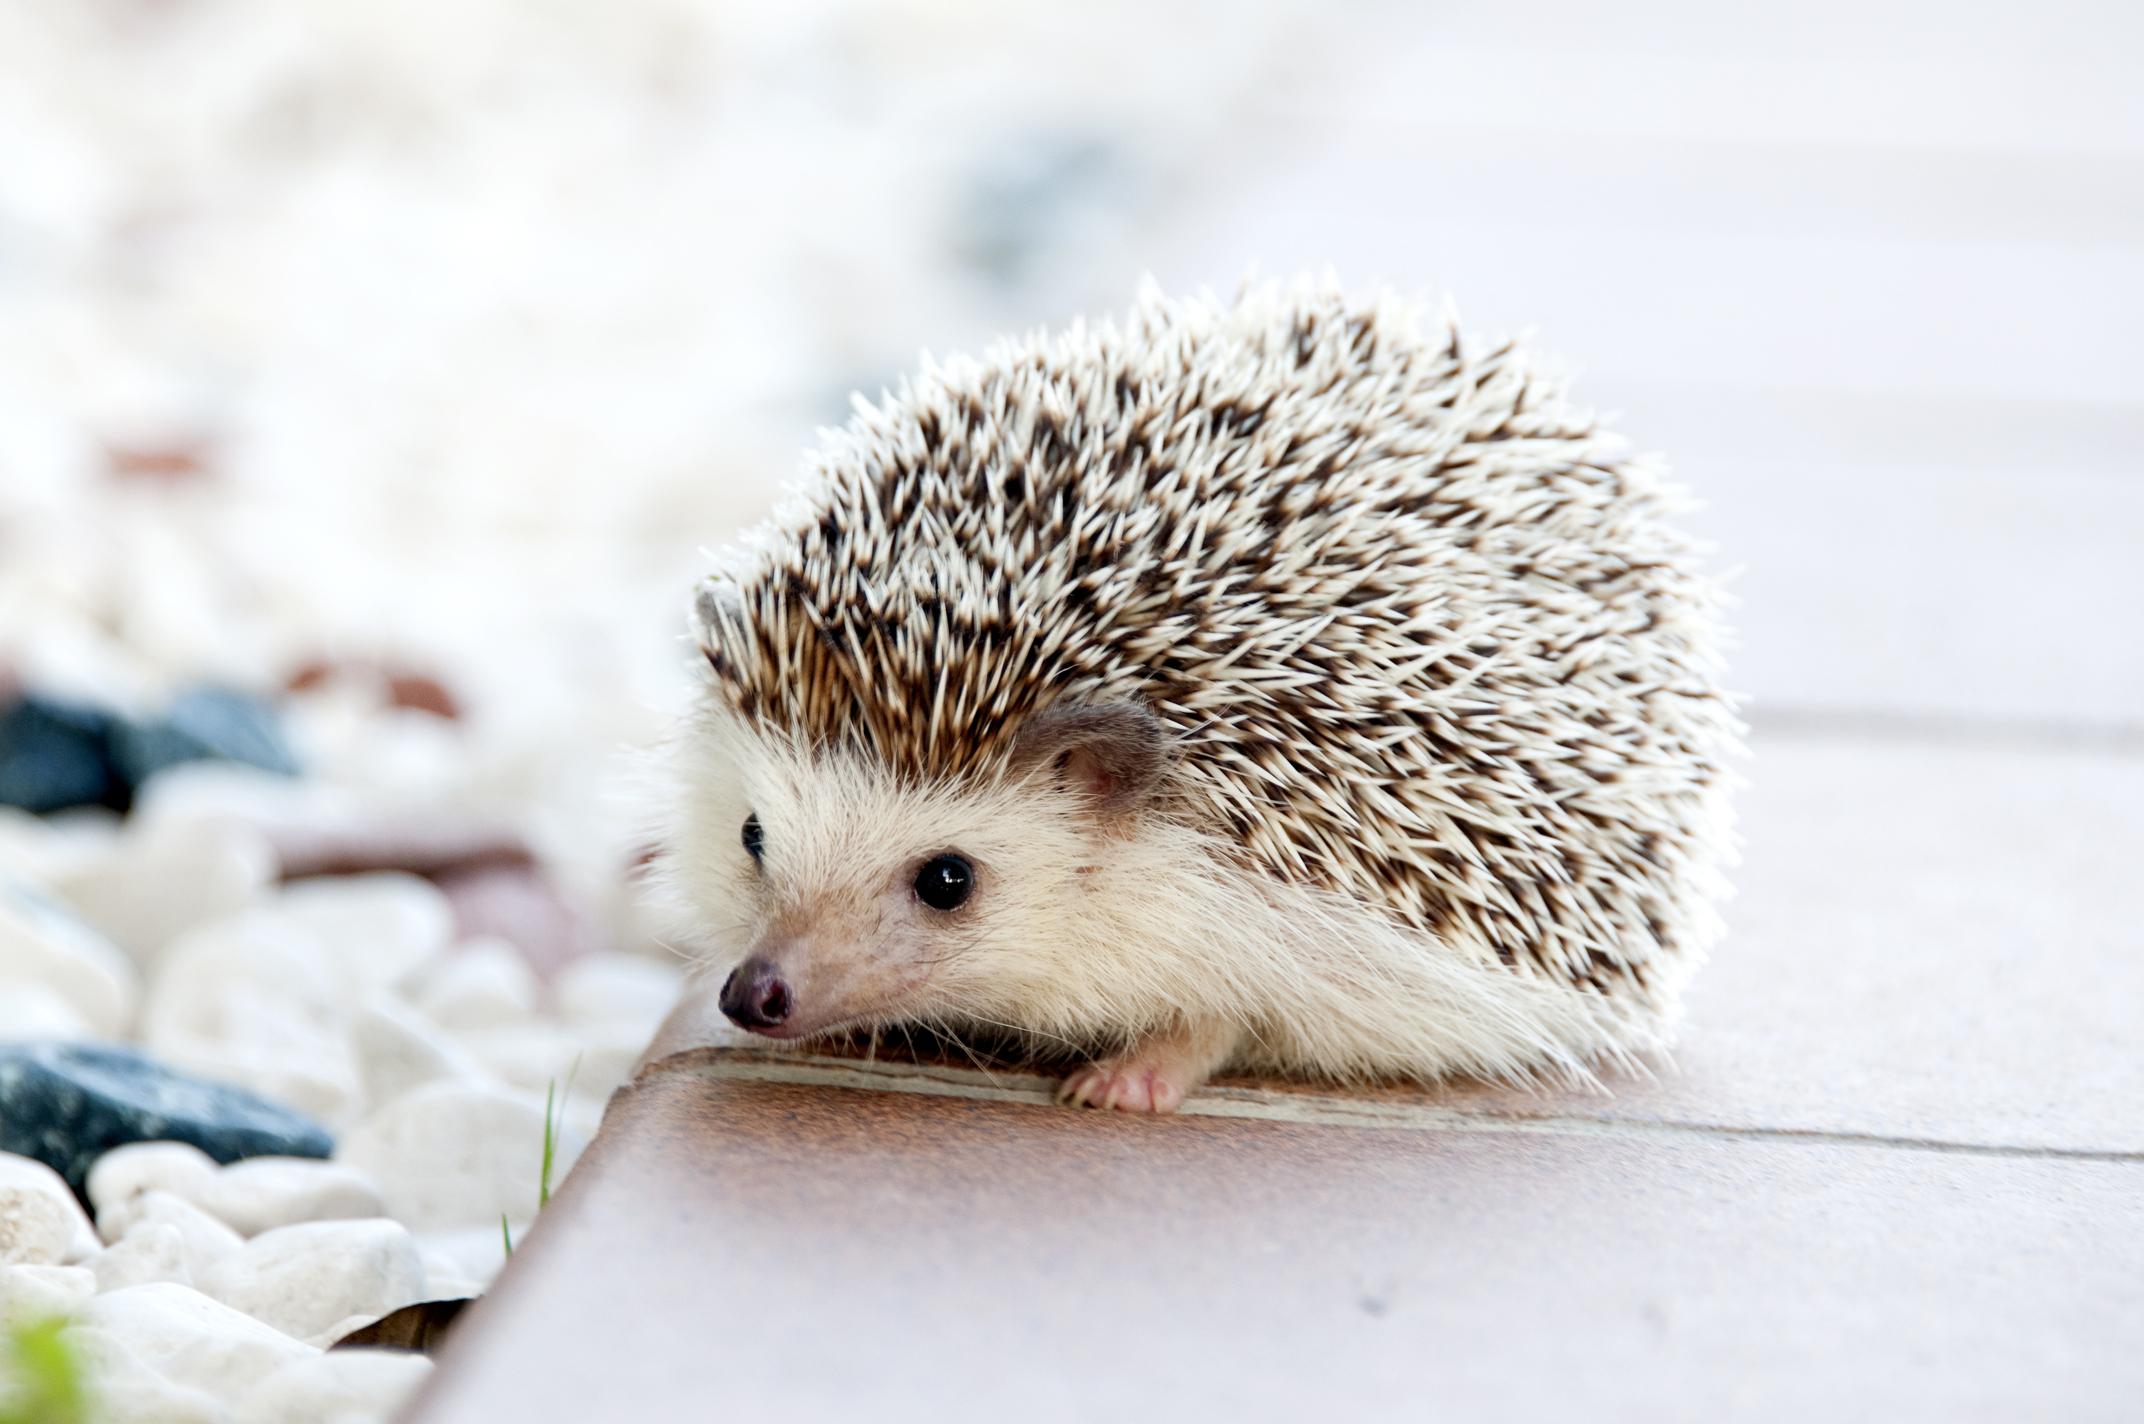 Common reasons for excessive hedgehog poop